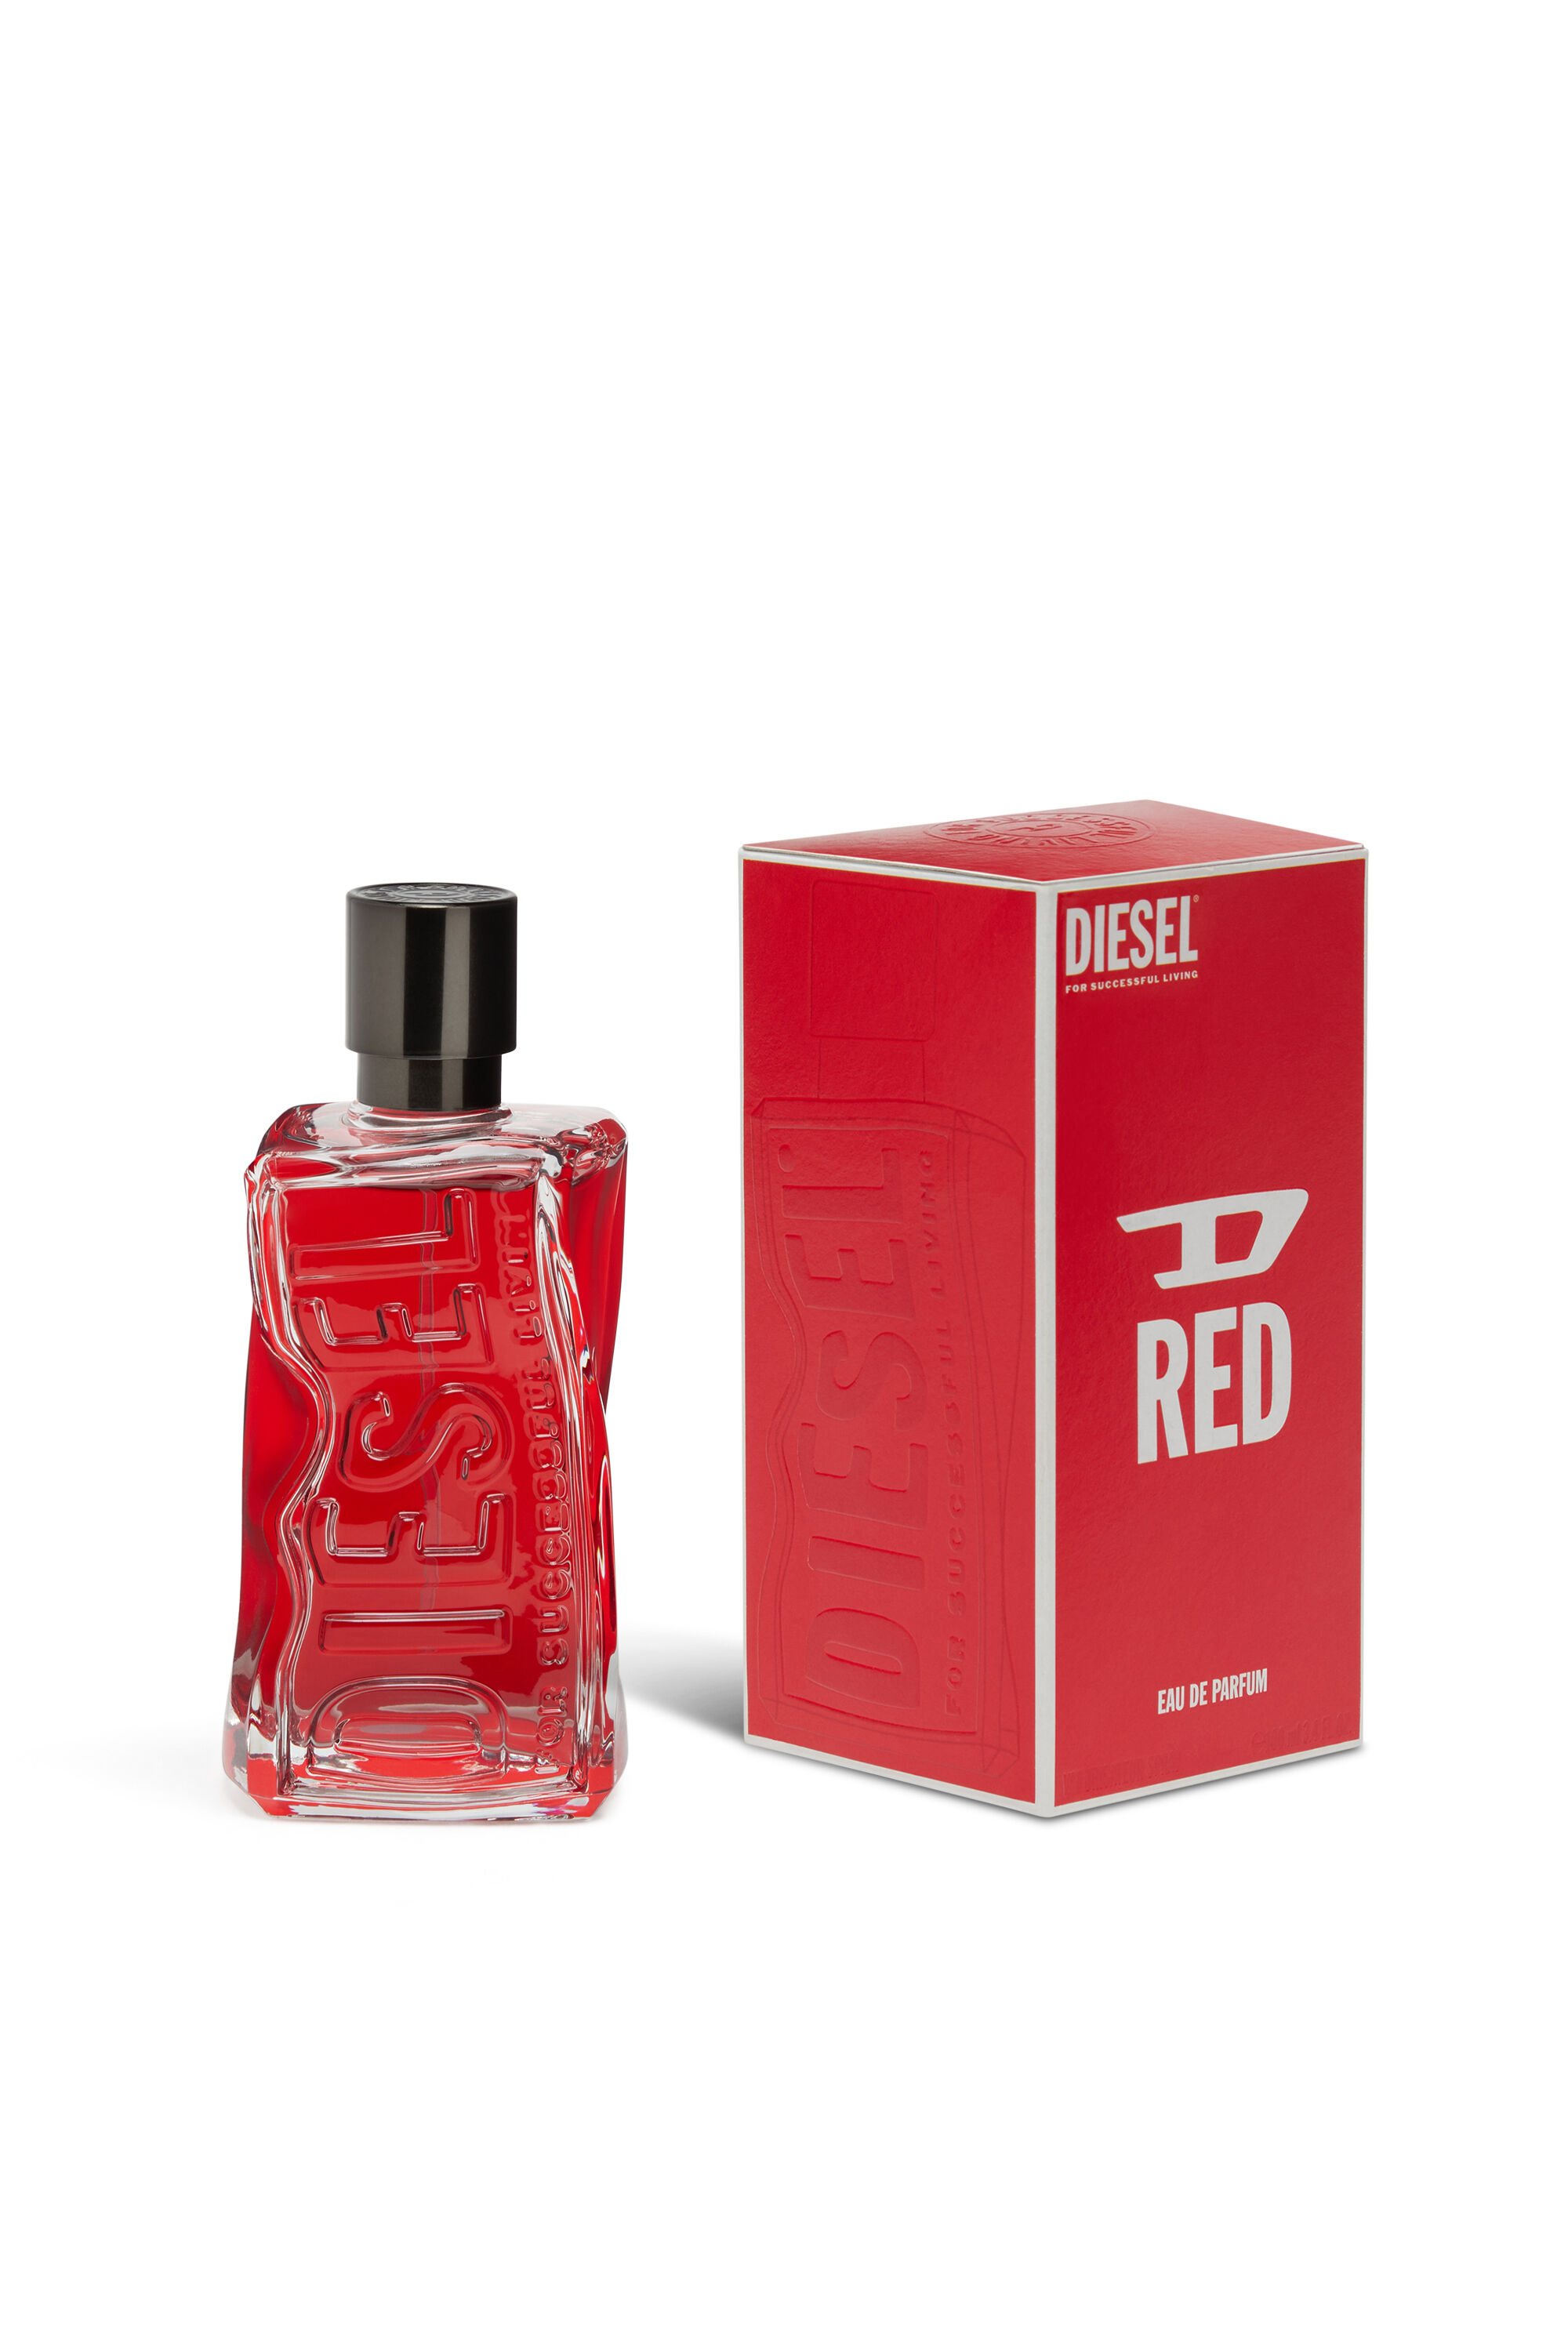 Diesel - D RED 50 ML, Man D RED 50ml, 1.7 FL.OZ., Eau de Parfum in Red - Image 2